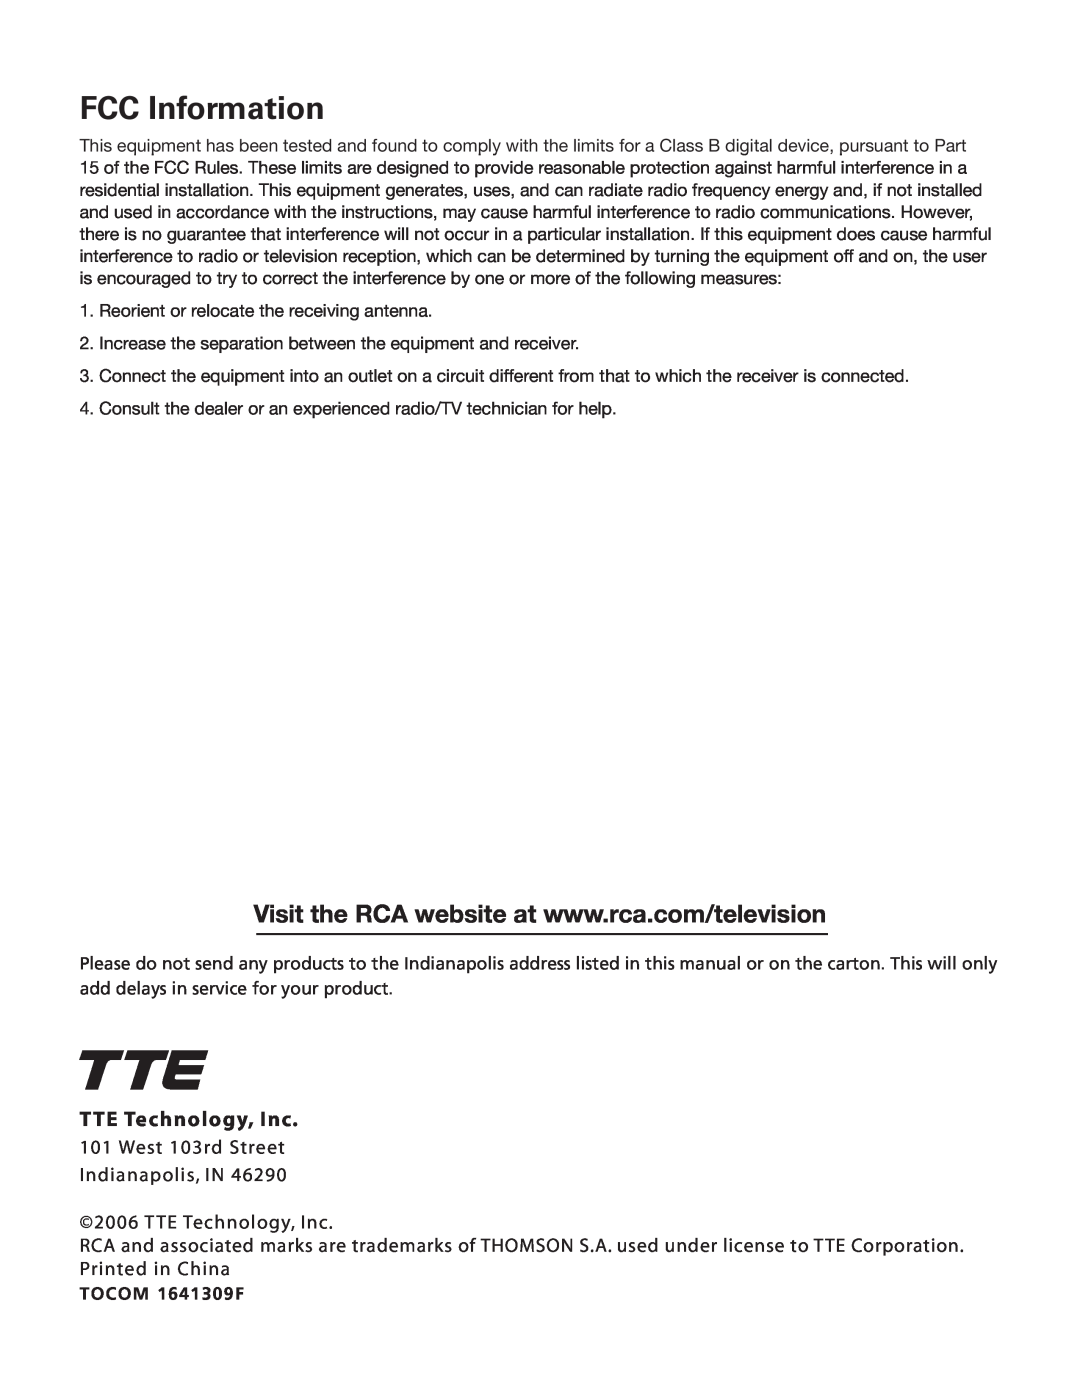 RCA 27V412T manual FCC Information, TTE Technology, Inc 